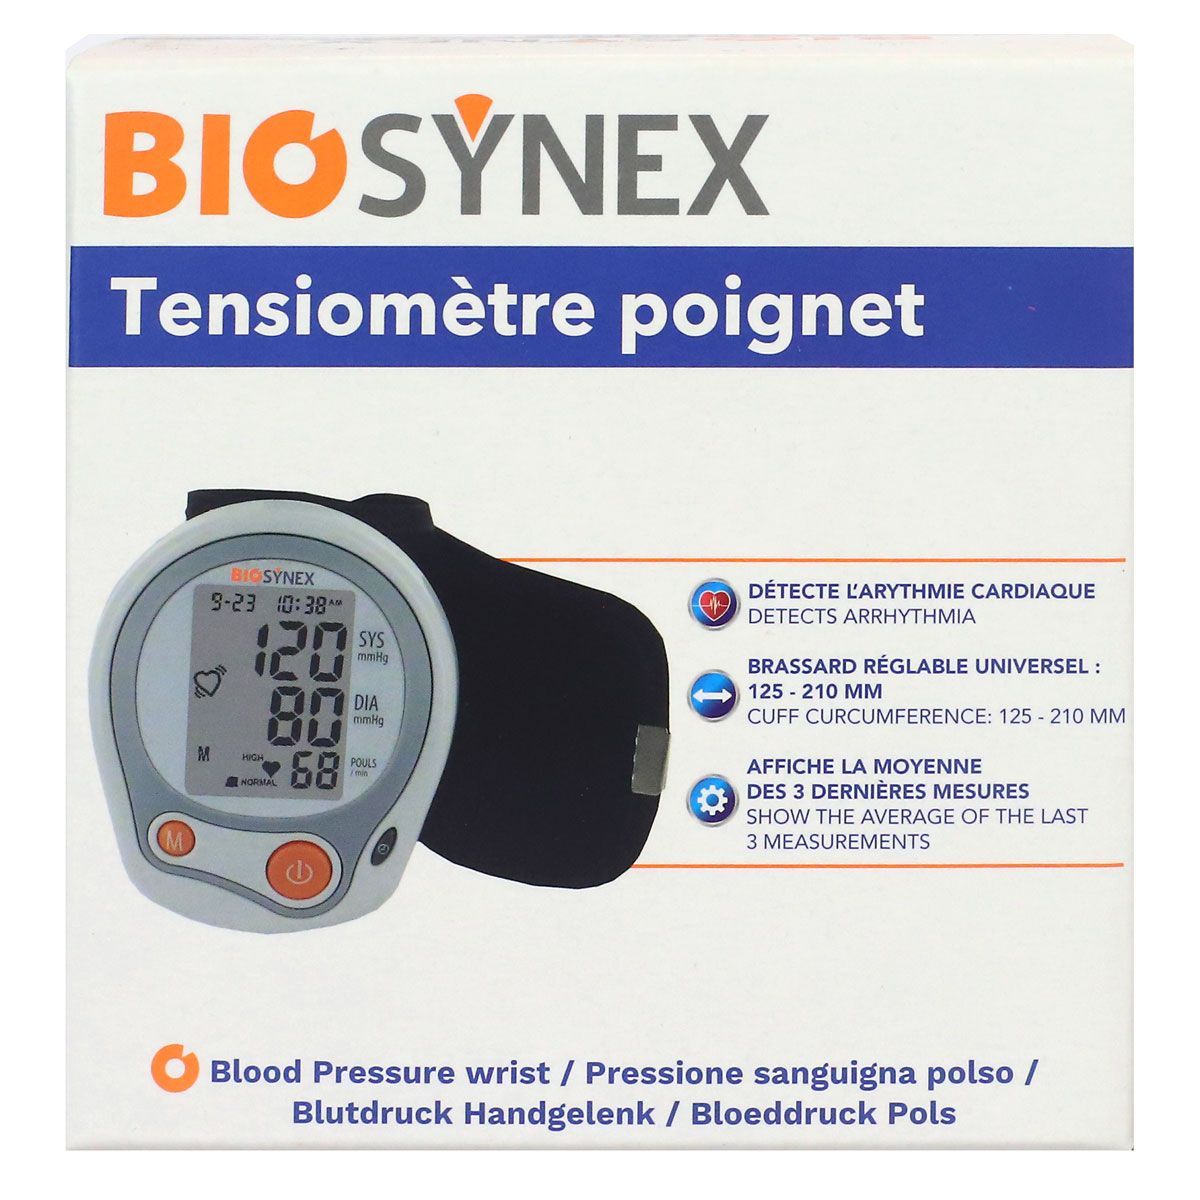 Tensiomètre poignet Exacto des Laboratoires Biosynex permet de